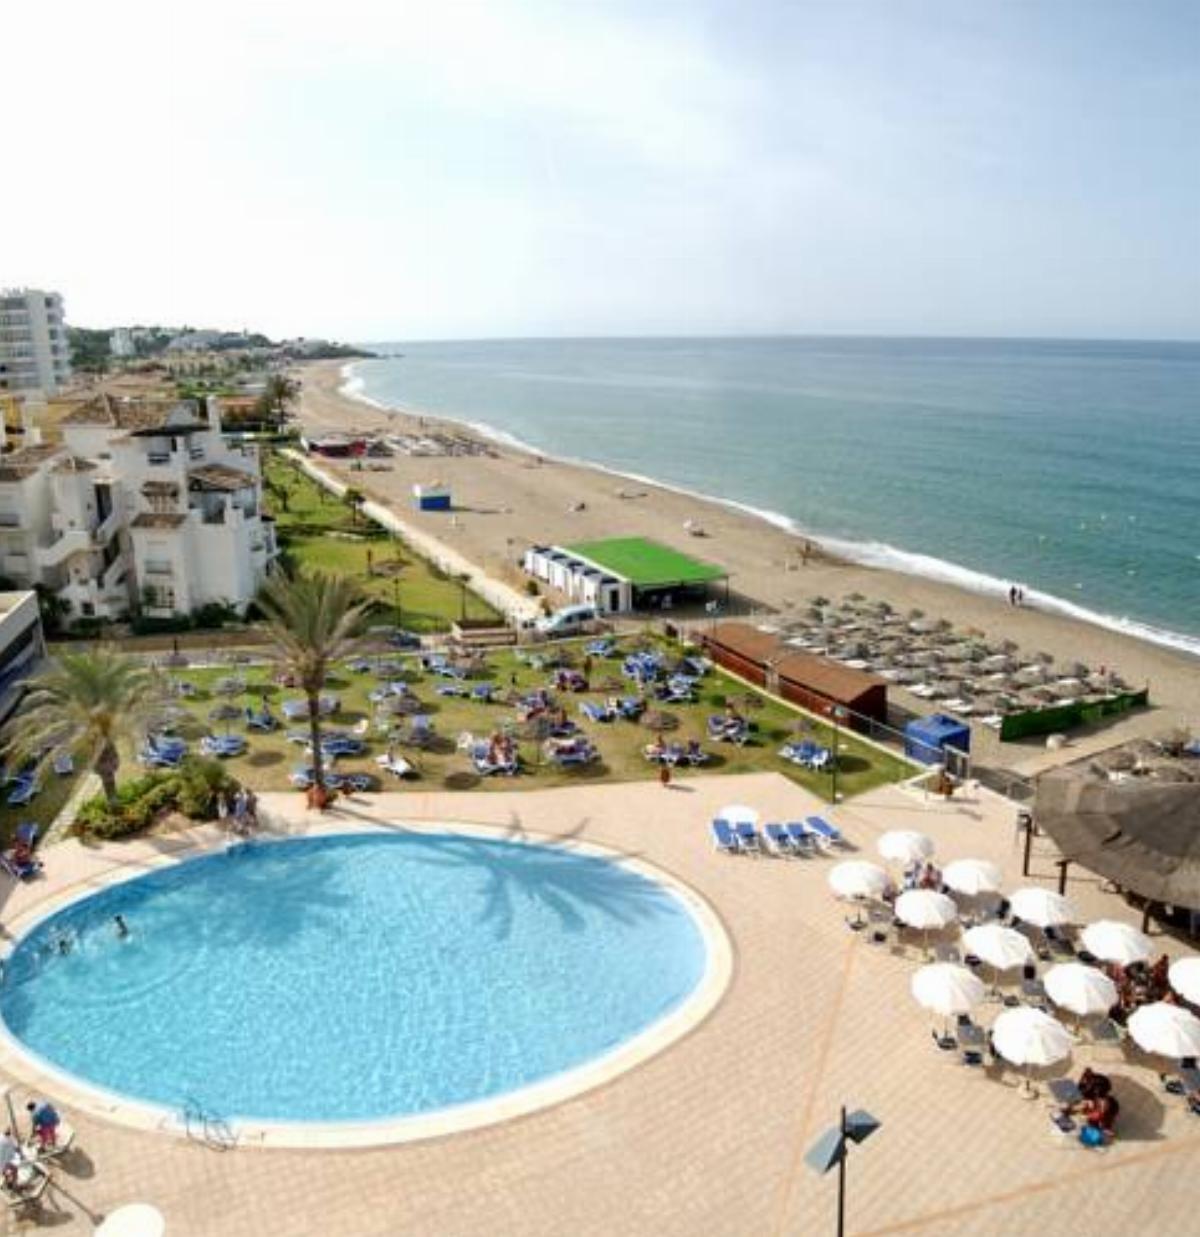 VIK Gran Hotel Costa del Sol Hotel La Cala de Mijas Spain